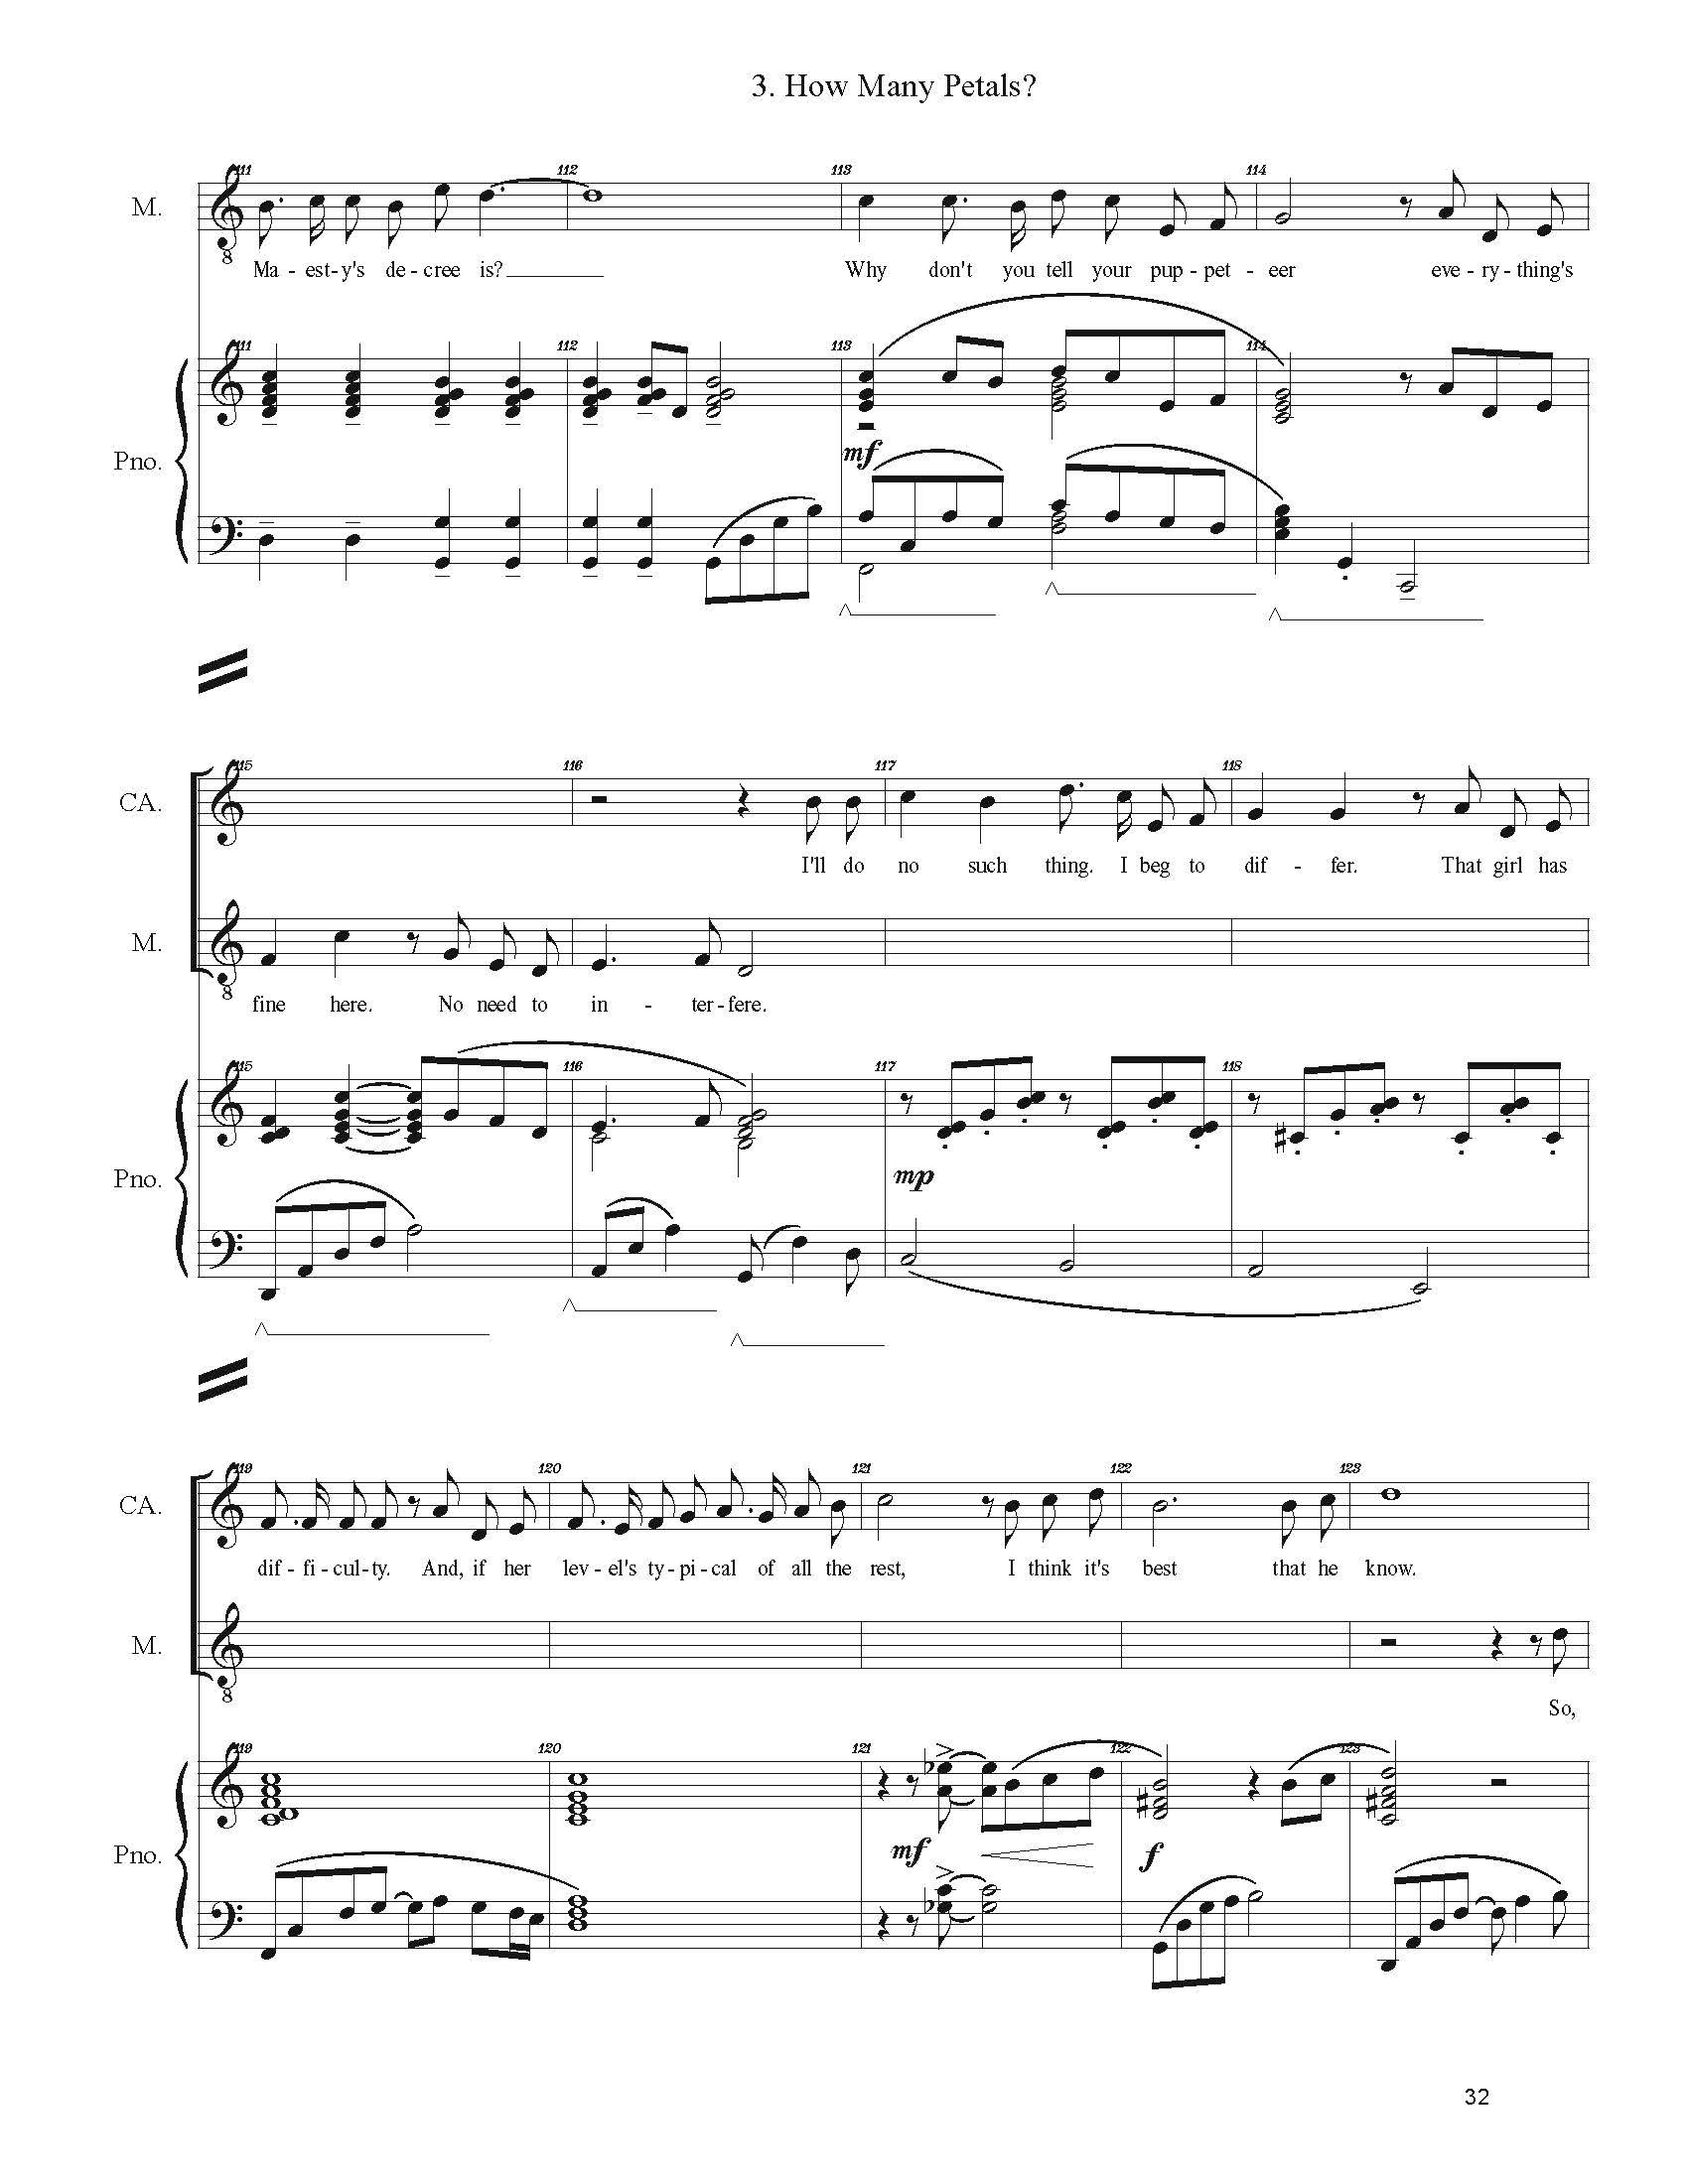 FULL PIANO VOCAL SCORE DRAFT 1 - Score_Page_032.jpg